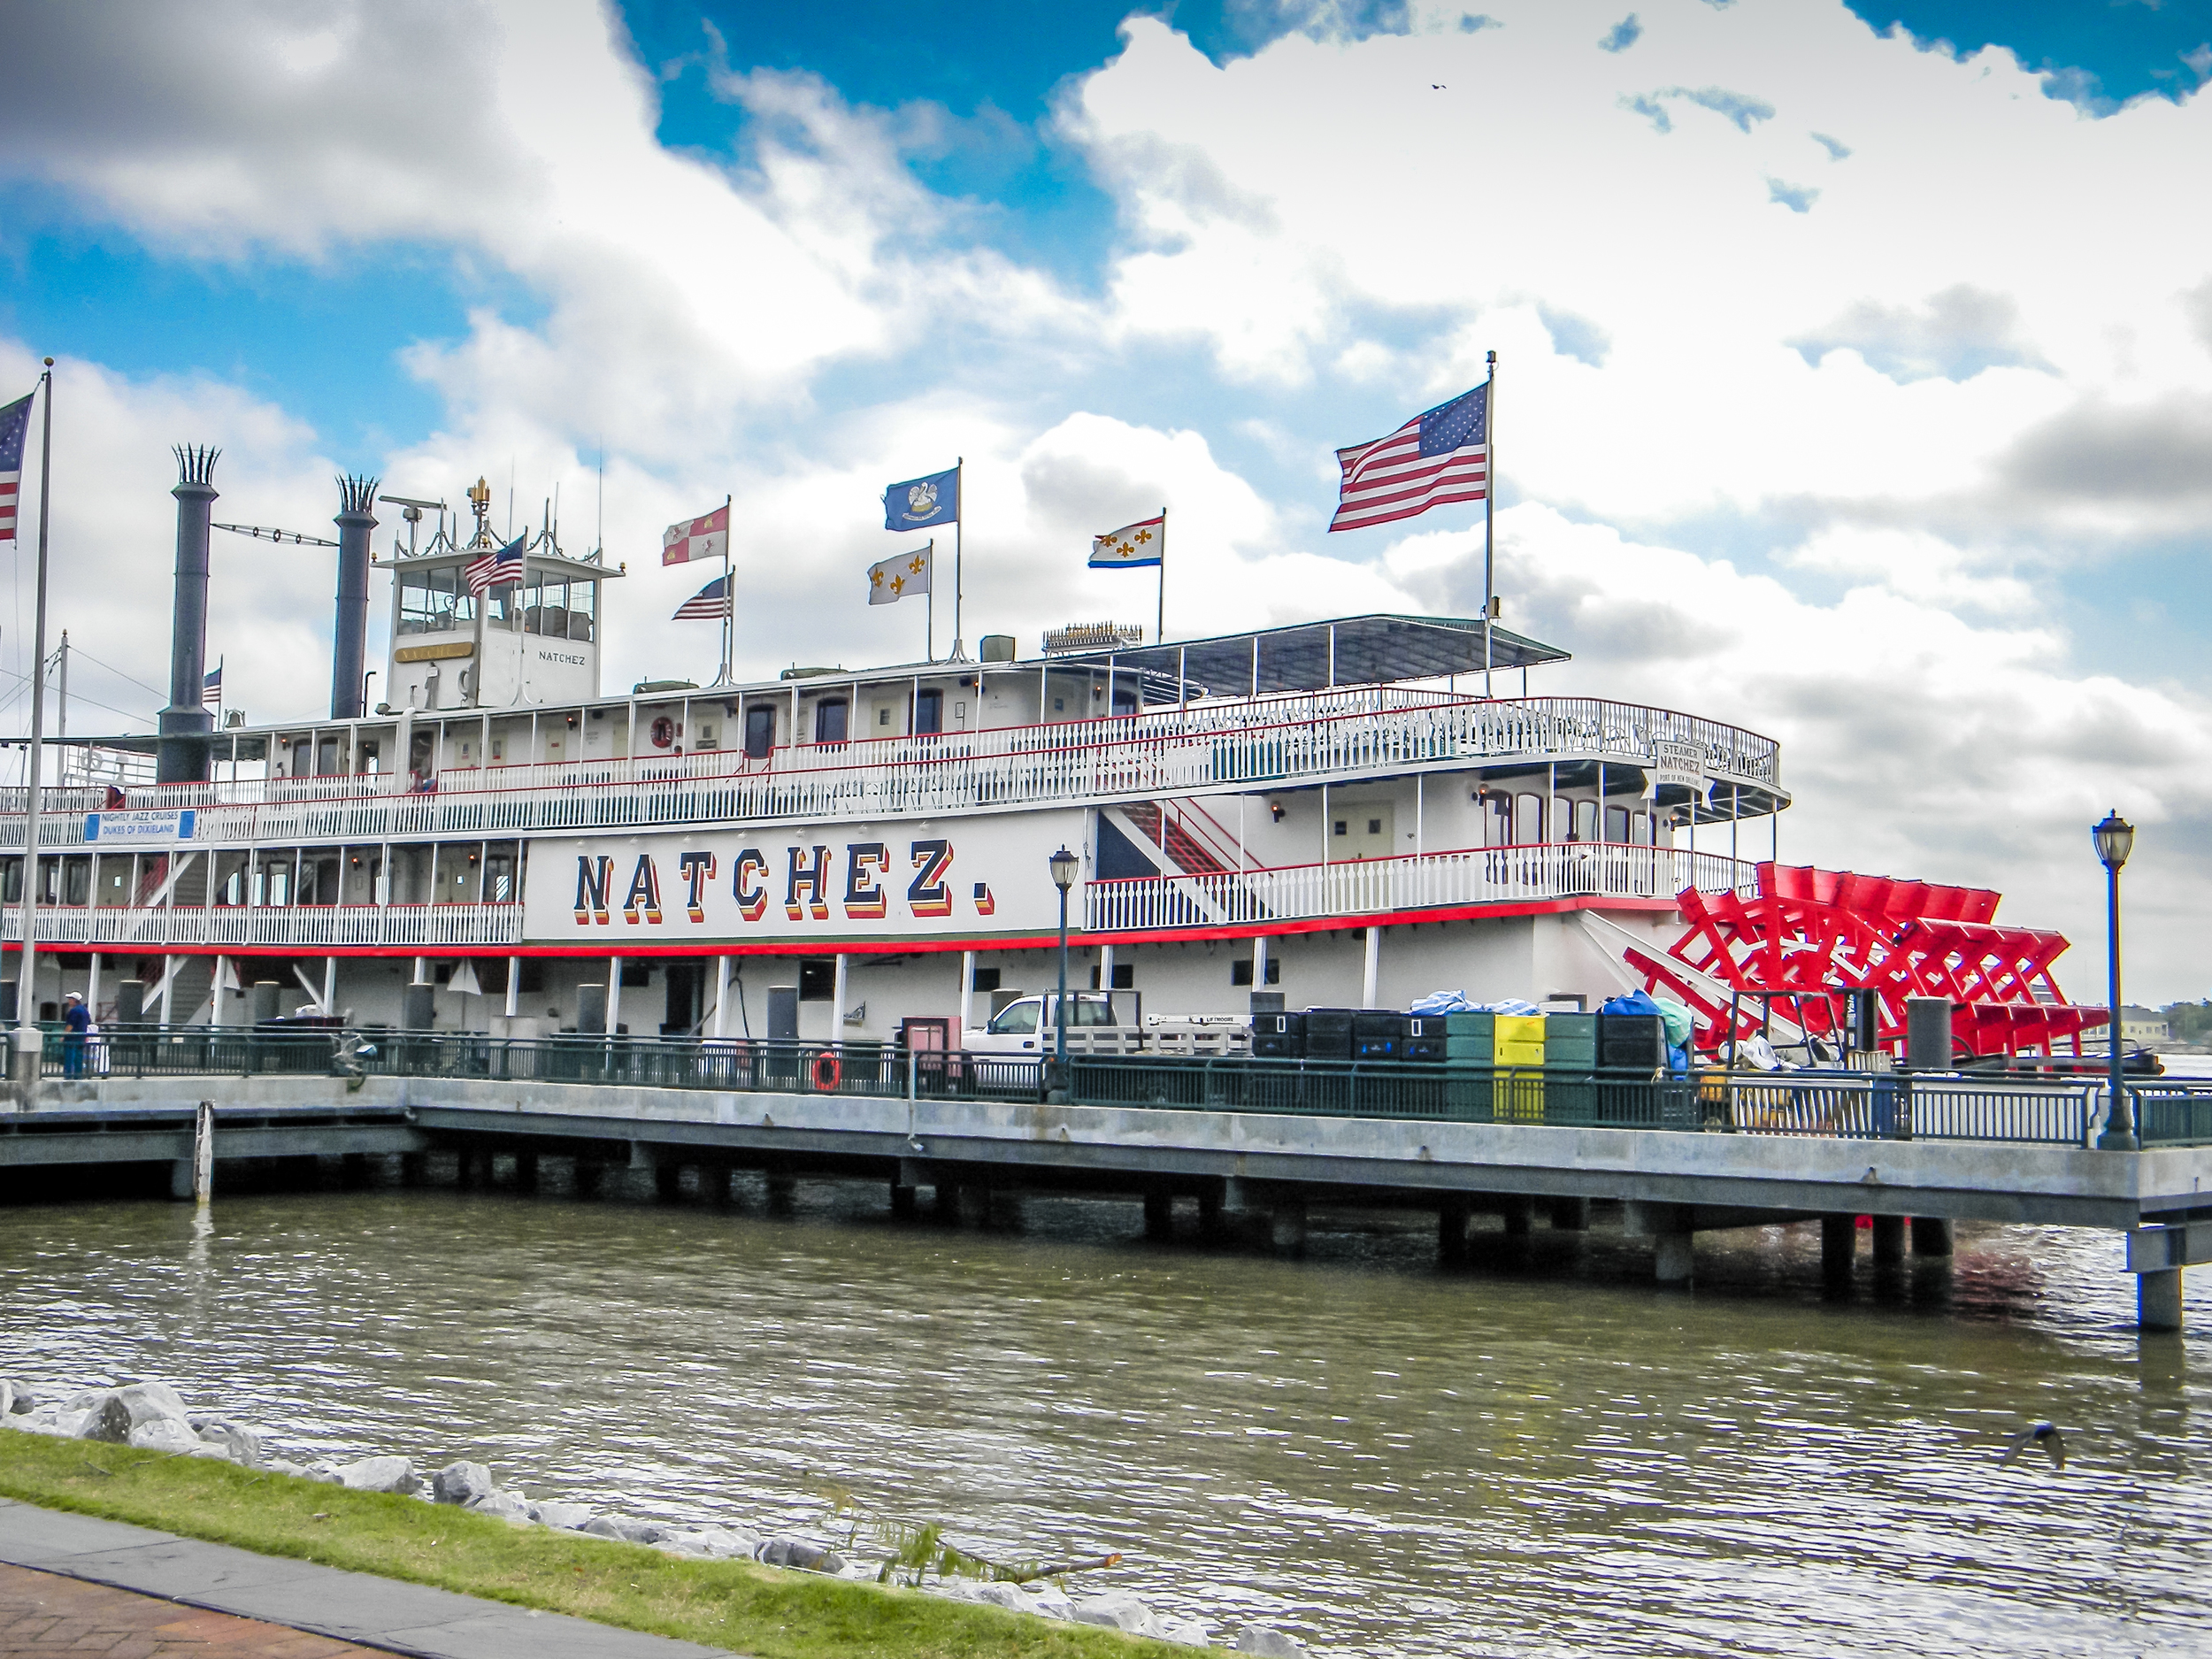 Steamboat Natchez River Cruise